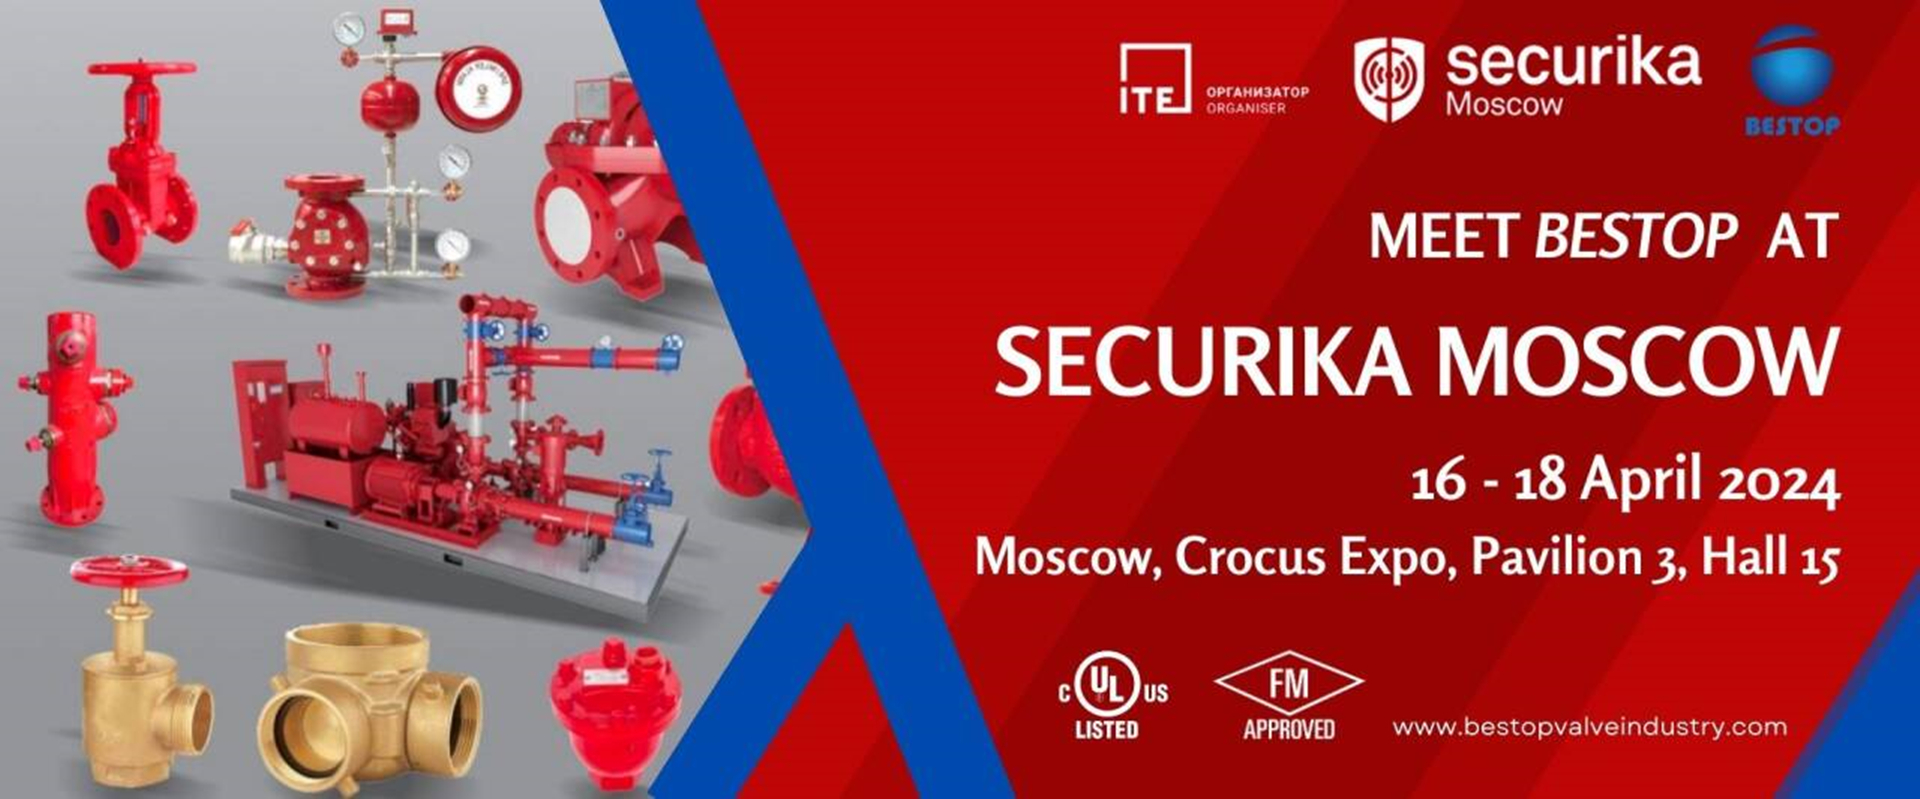 Securika Moscow (1)